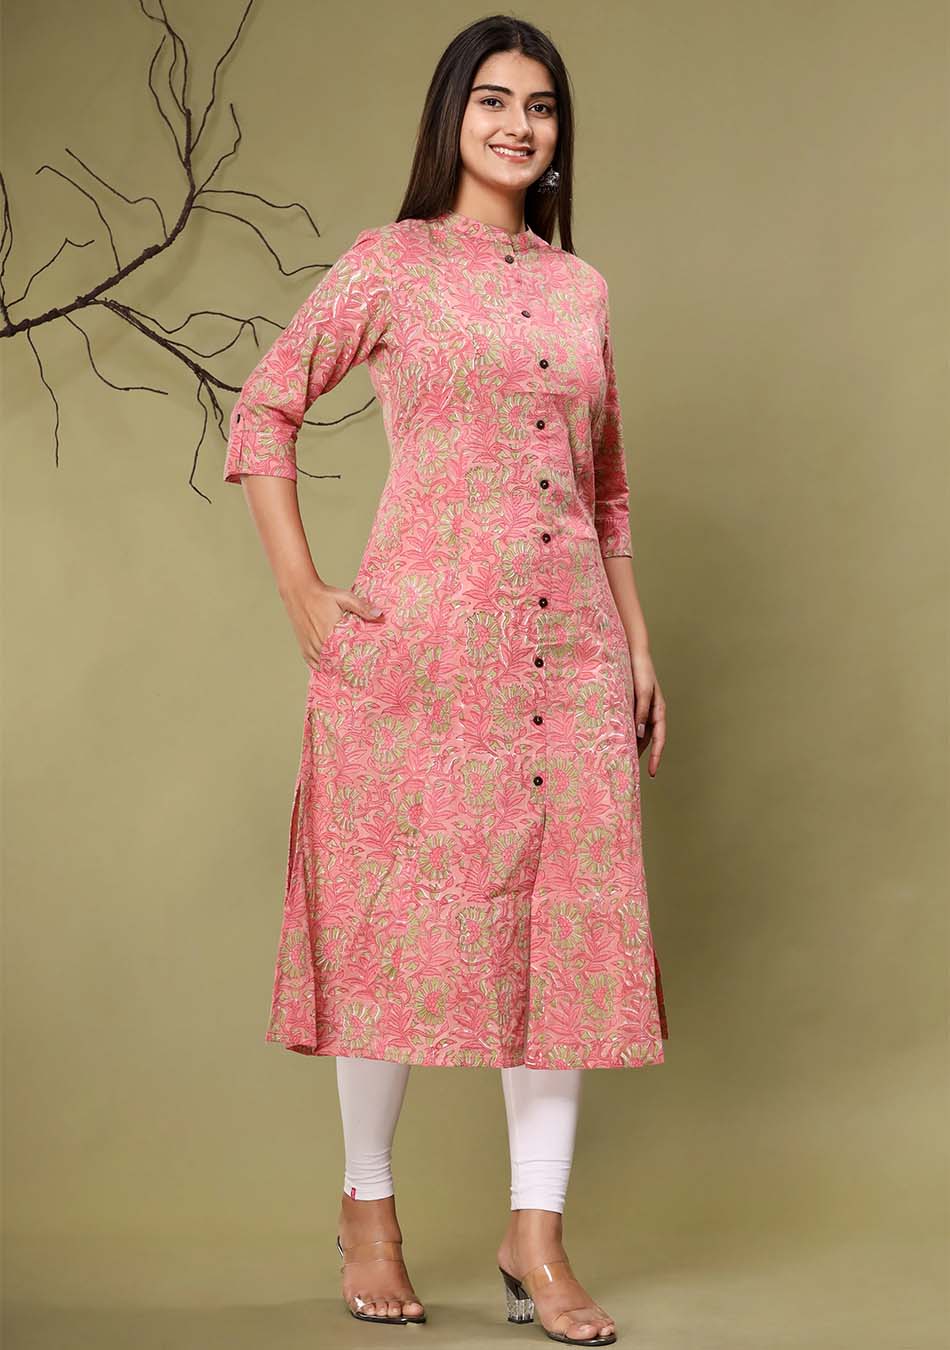 Pink kurta showcases intricate floral print